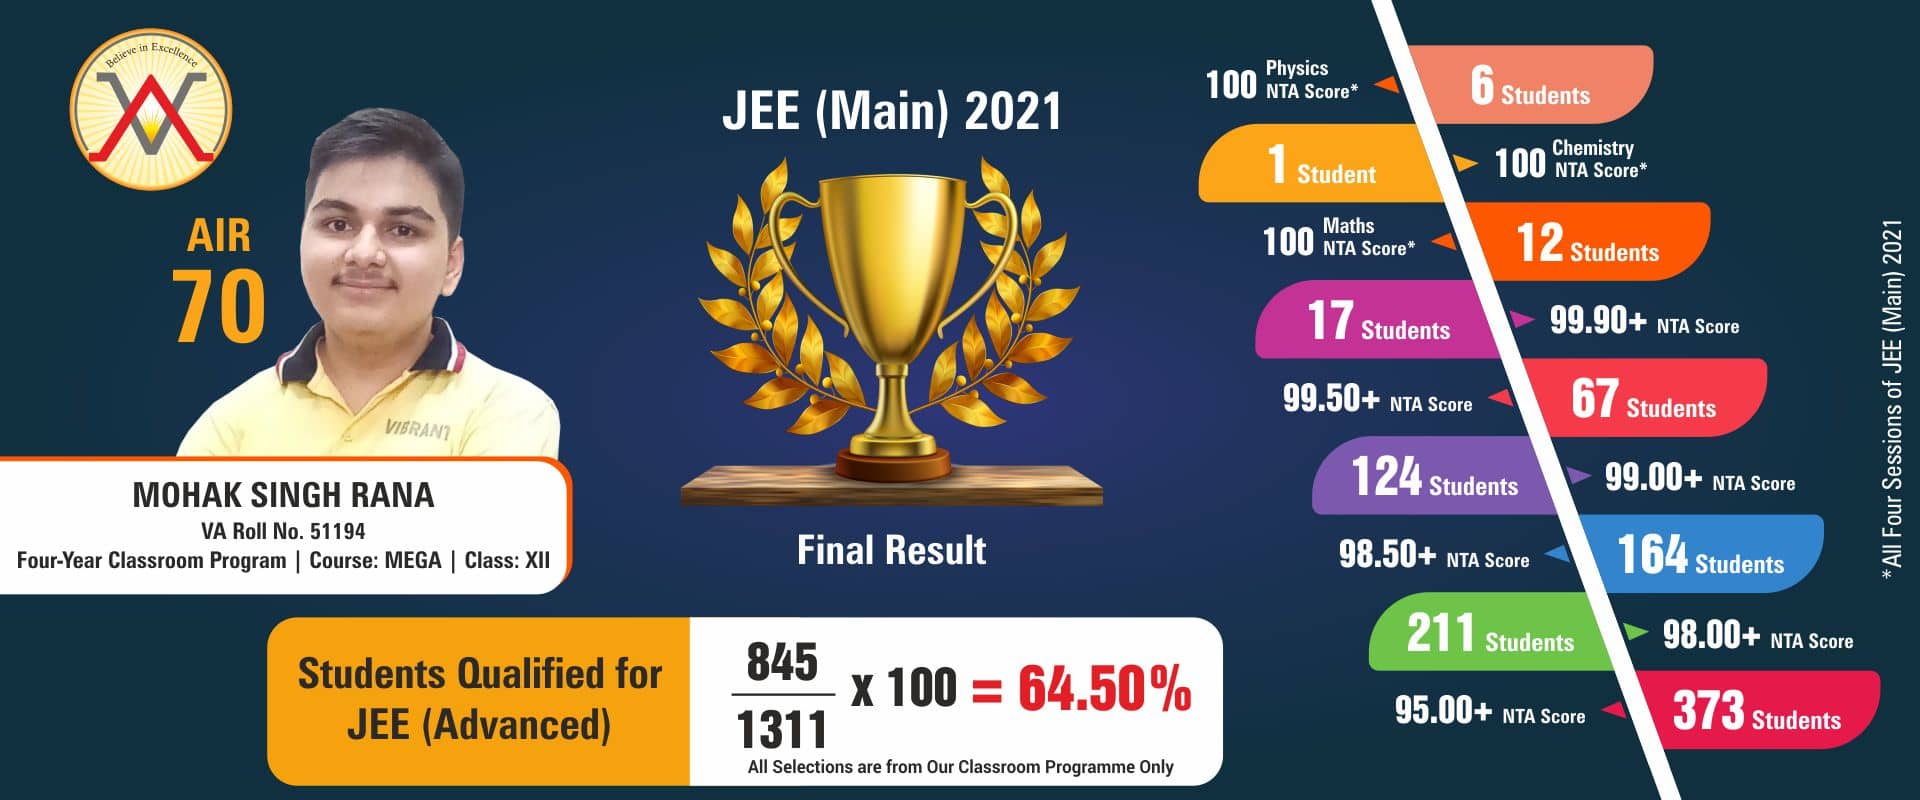 Jee Main Result 2020-21